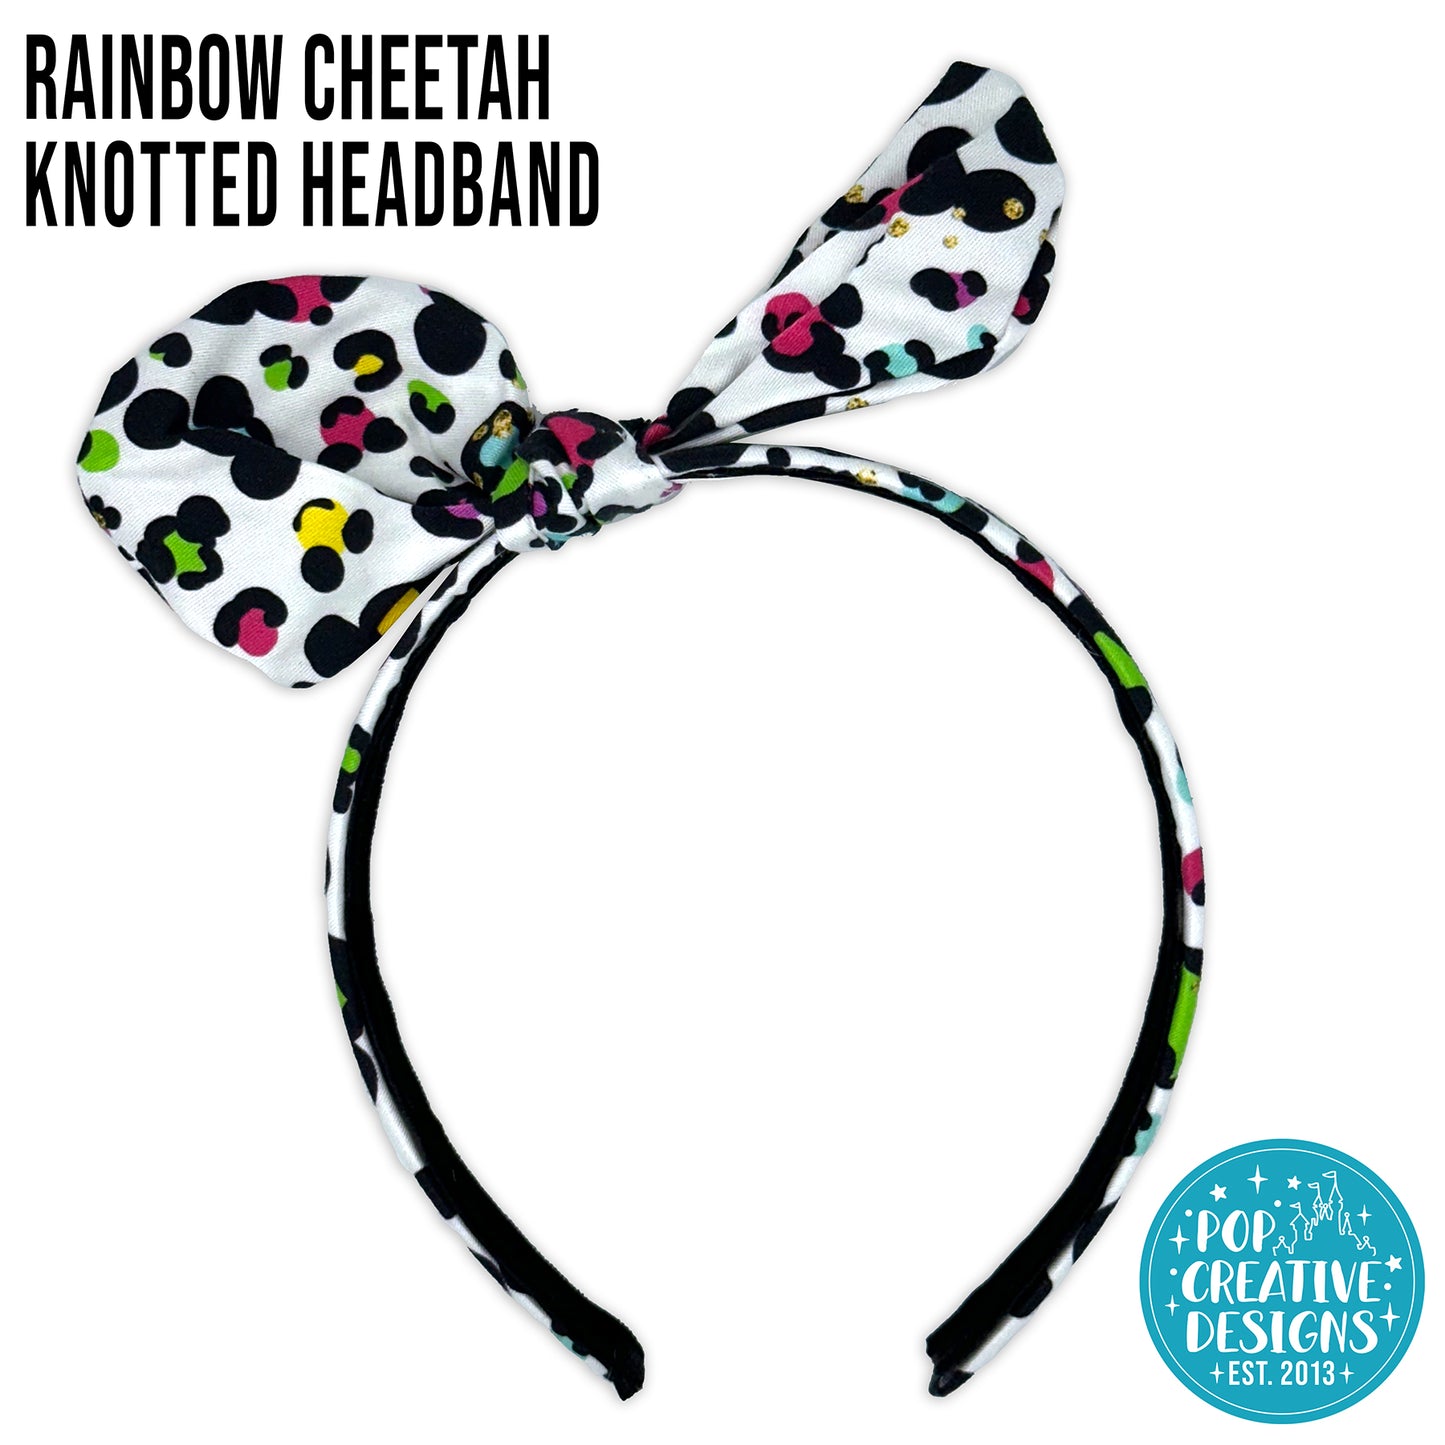 Rainbow Cheetah Knotted Headband